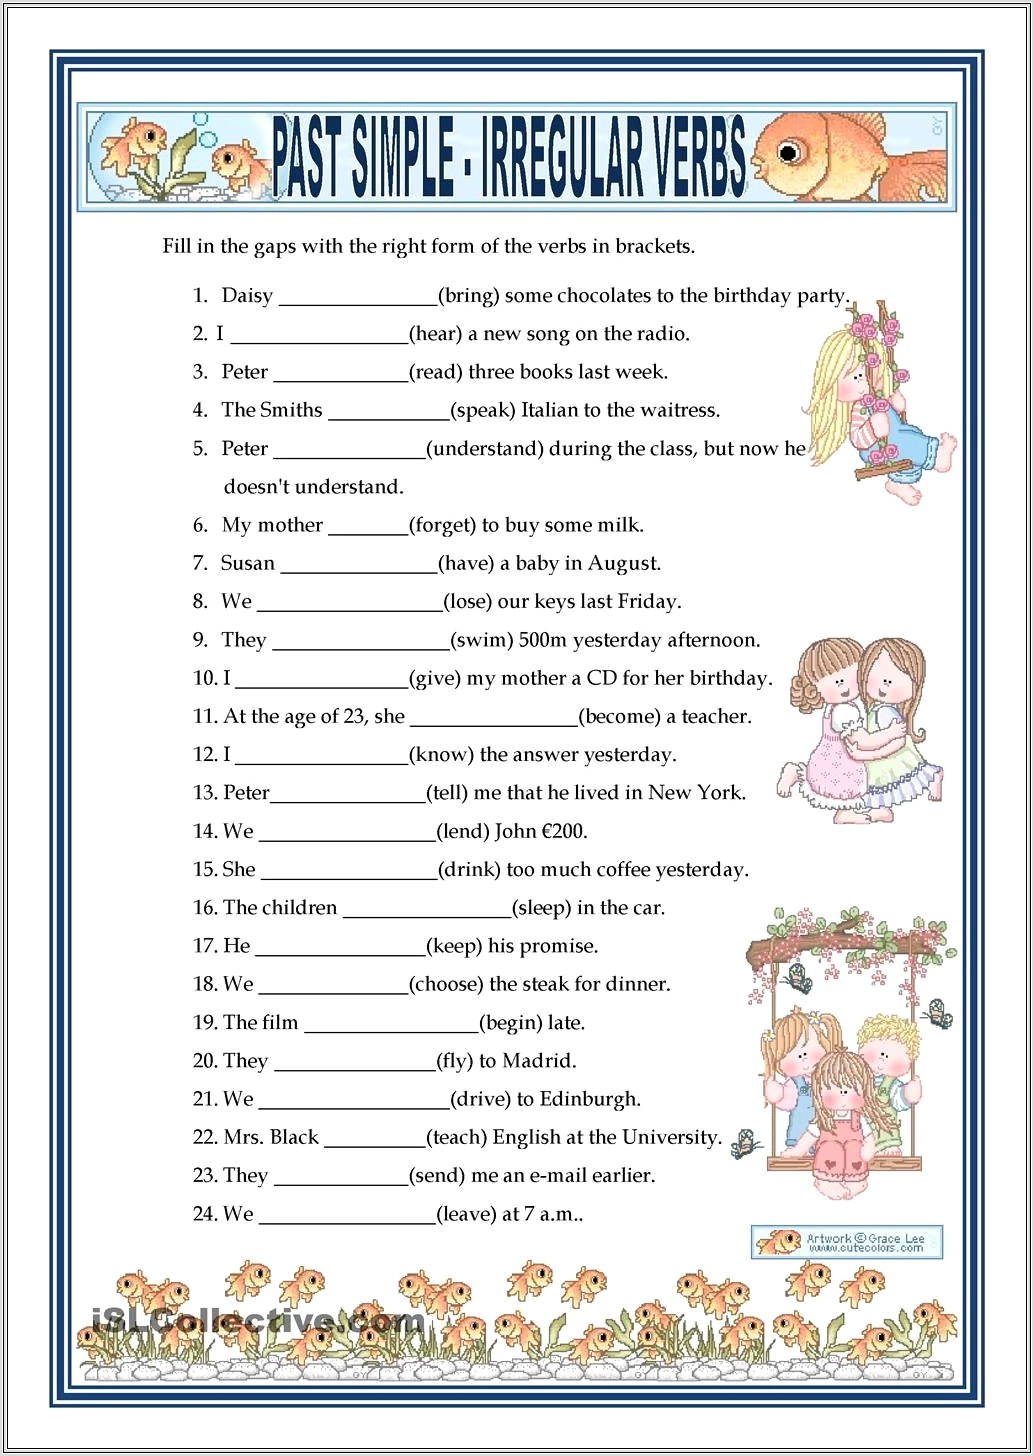 3rd-grade-worksheets-irregular-verbs-worksheet-restiumani-resume-jvyd62xklk